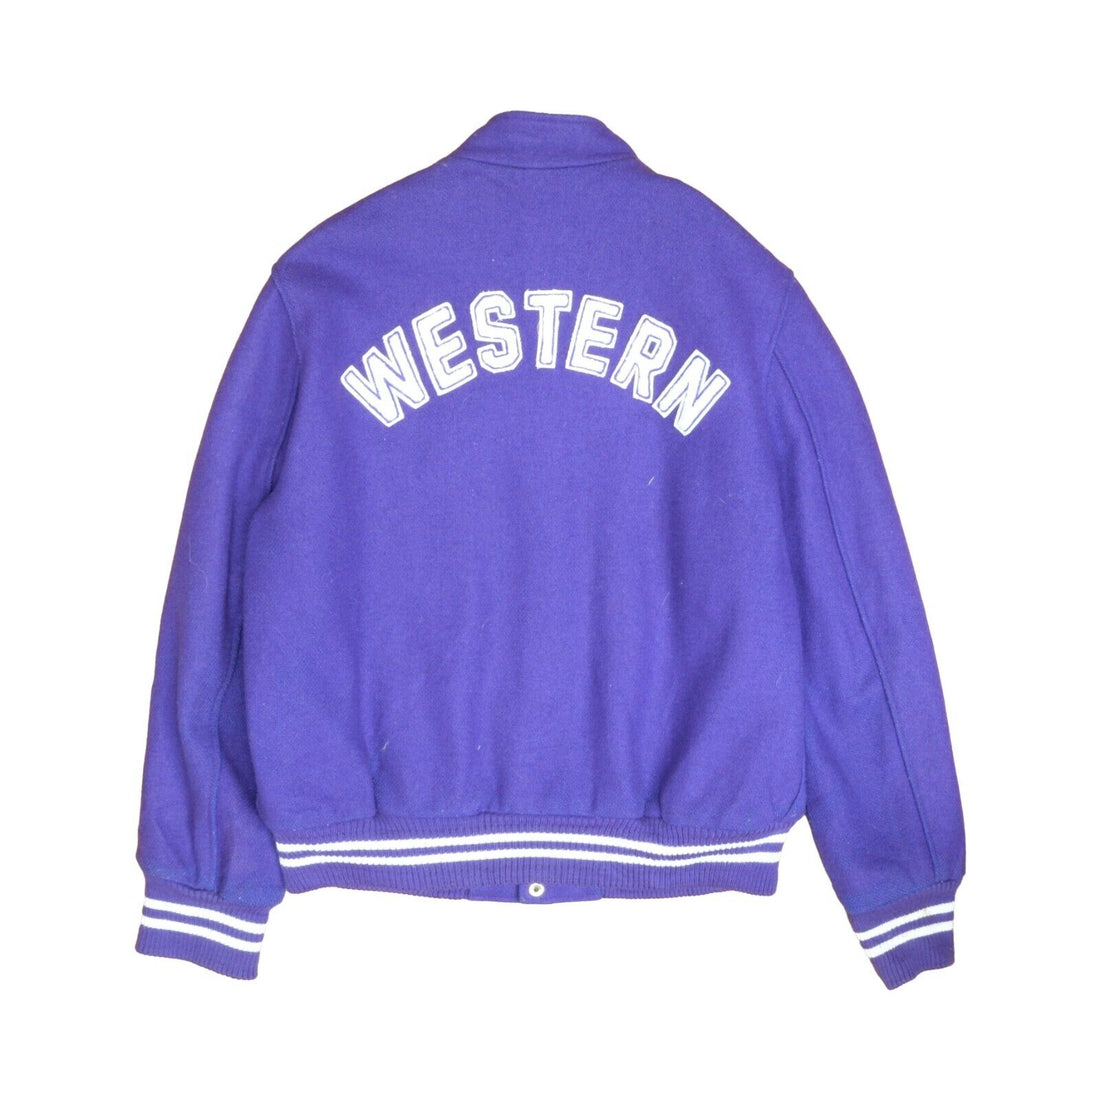 Vintage Western Letterman Wool Varsity Bomber Jacket Size Large Purple